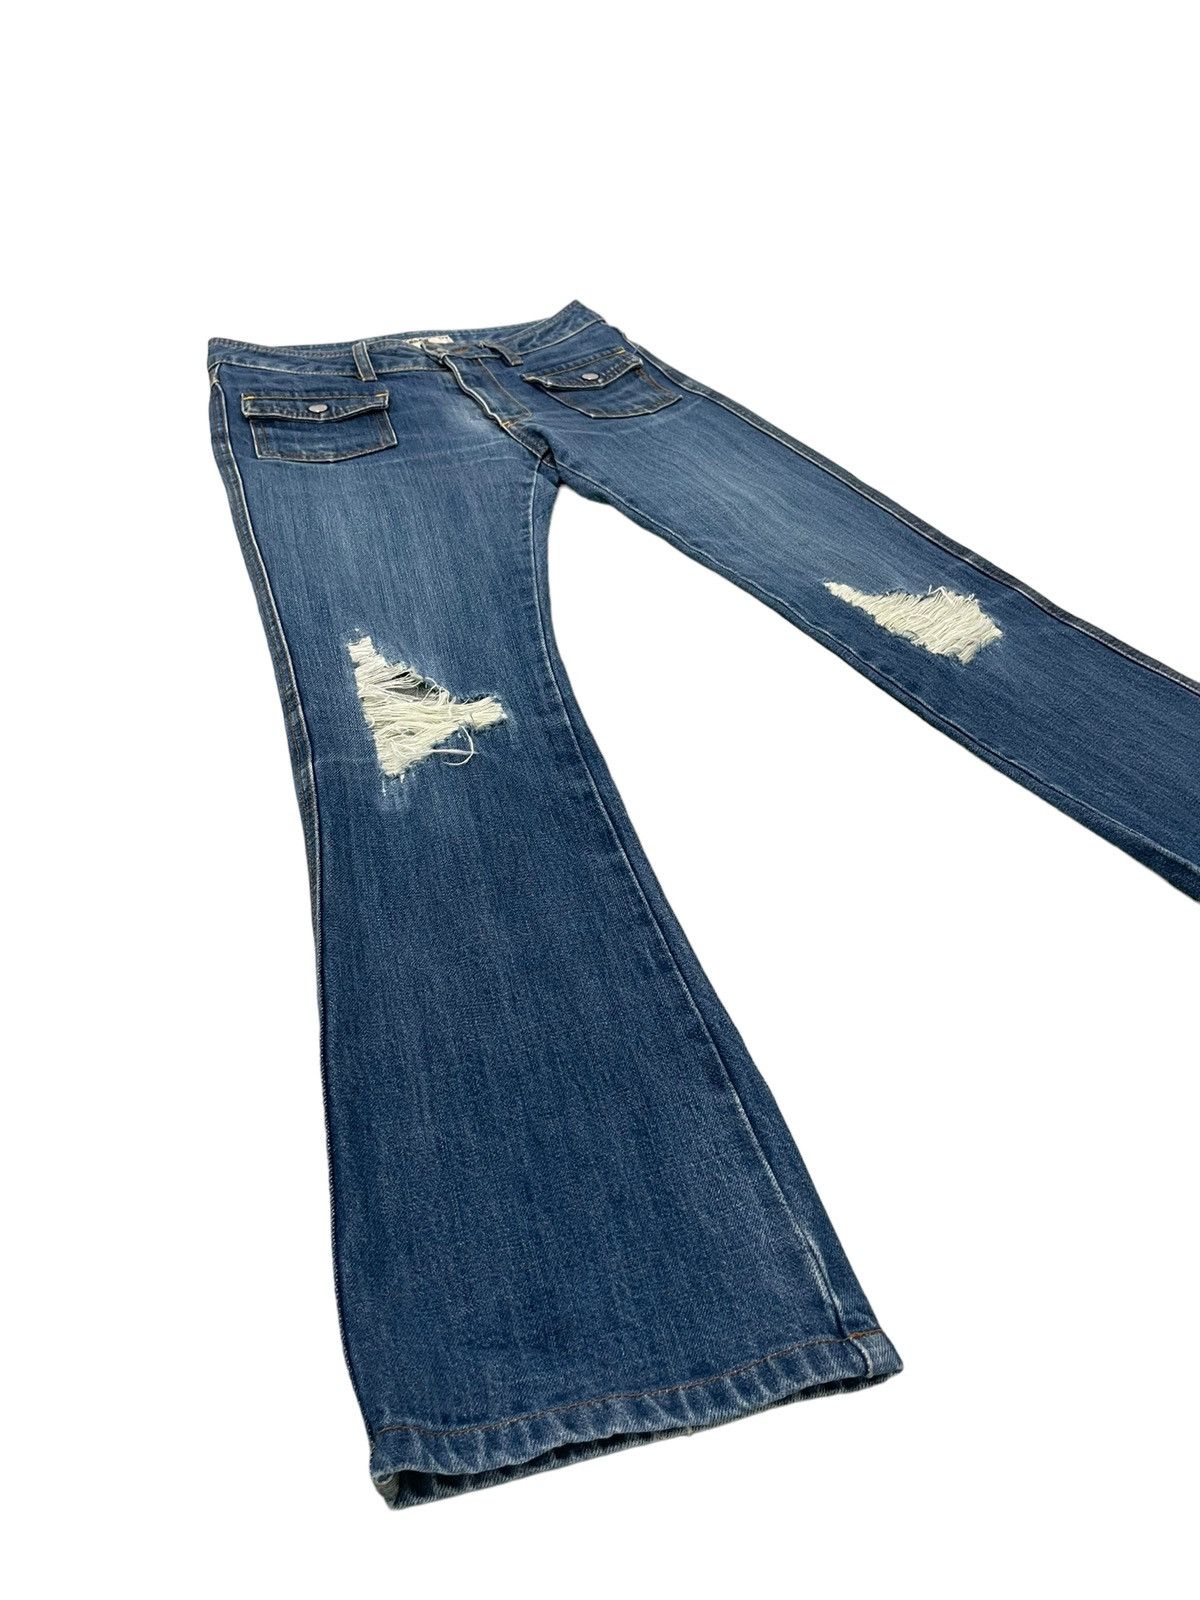 Hysteric Glamour Flare Jeans Katharine Hamnett Distress Denim Low Rise ...